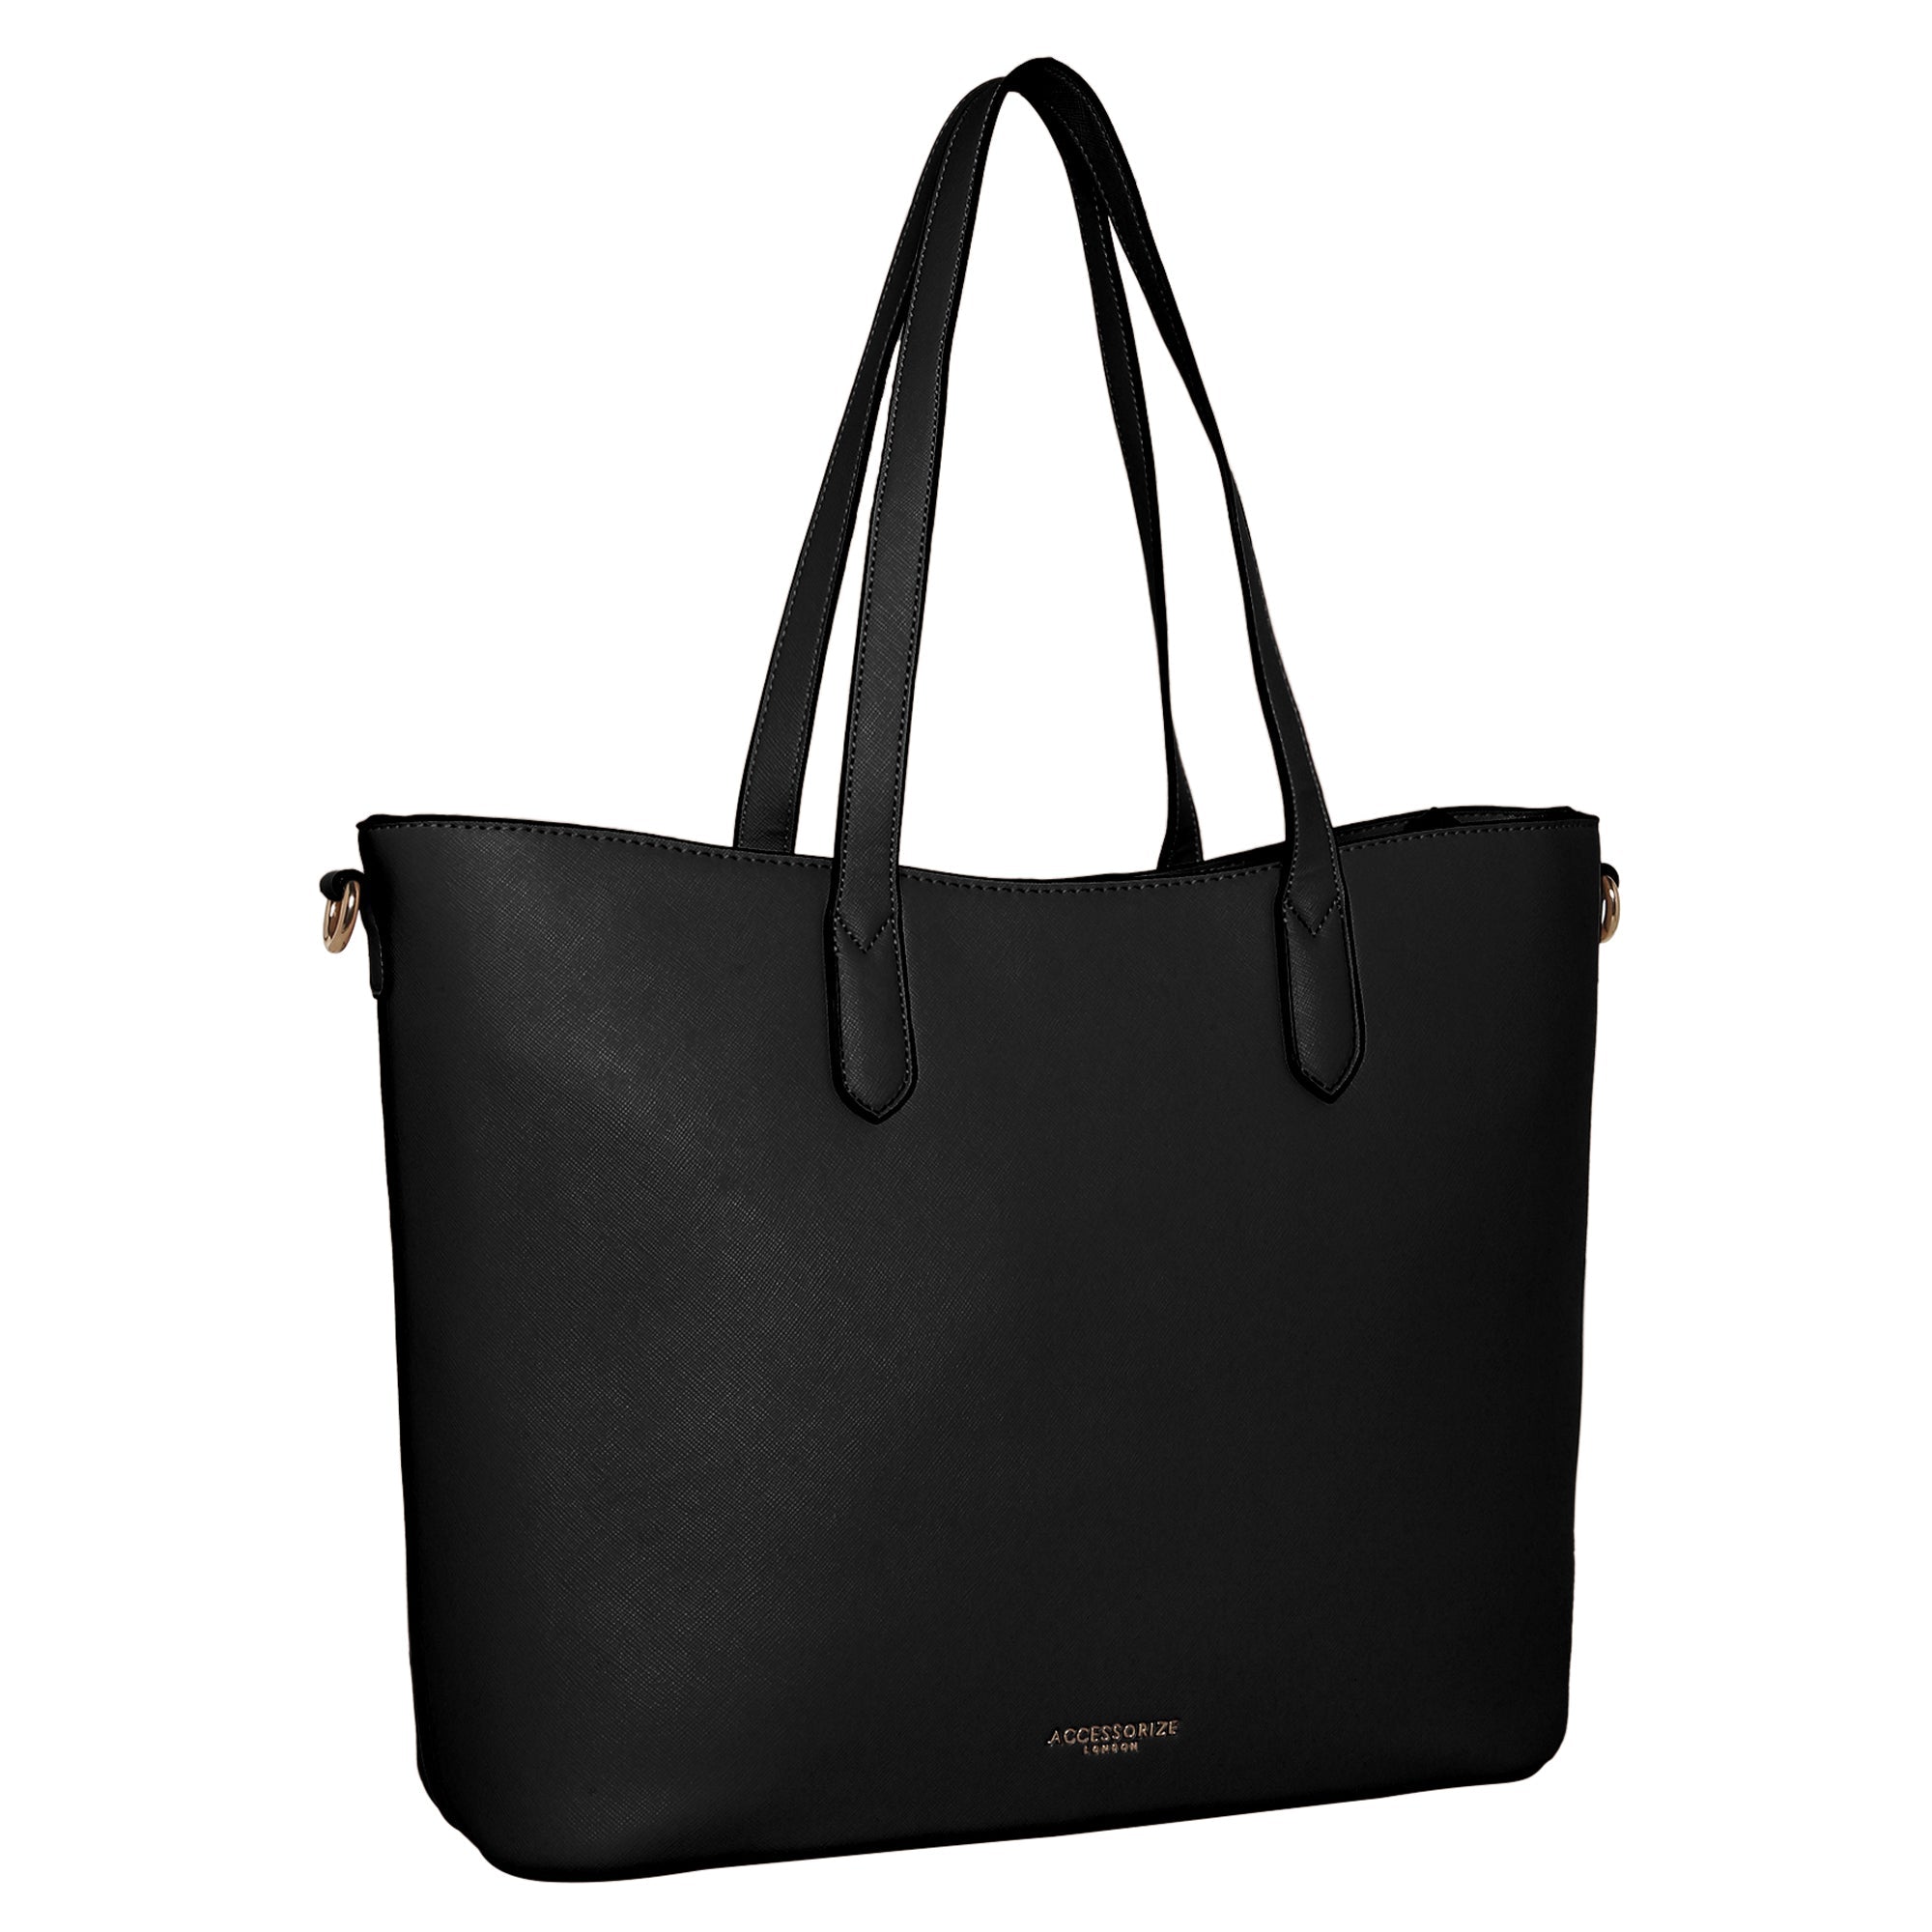 Accessorize London Women's Faux Leather black Daffodil tote bag